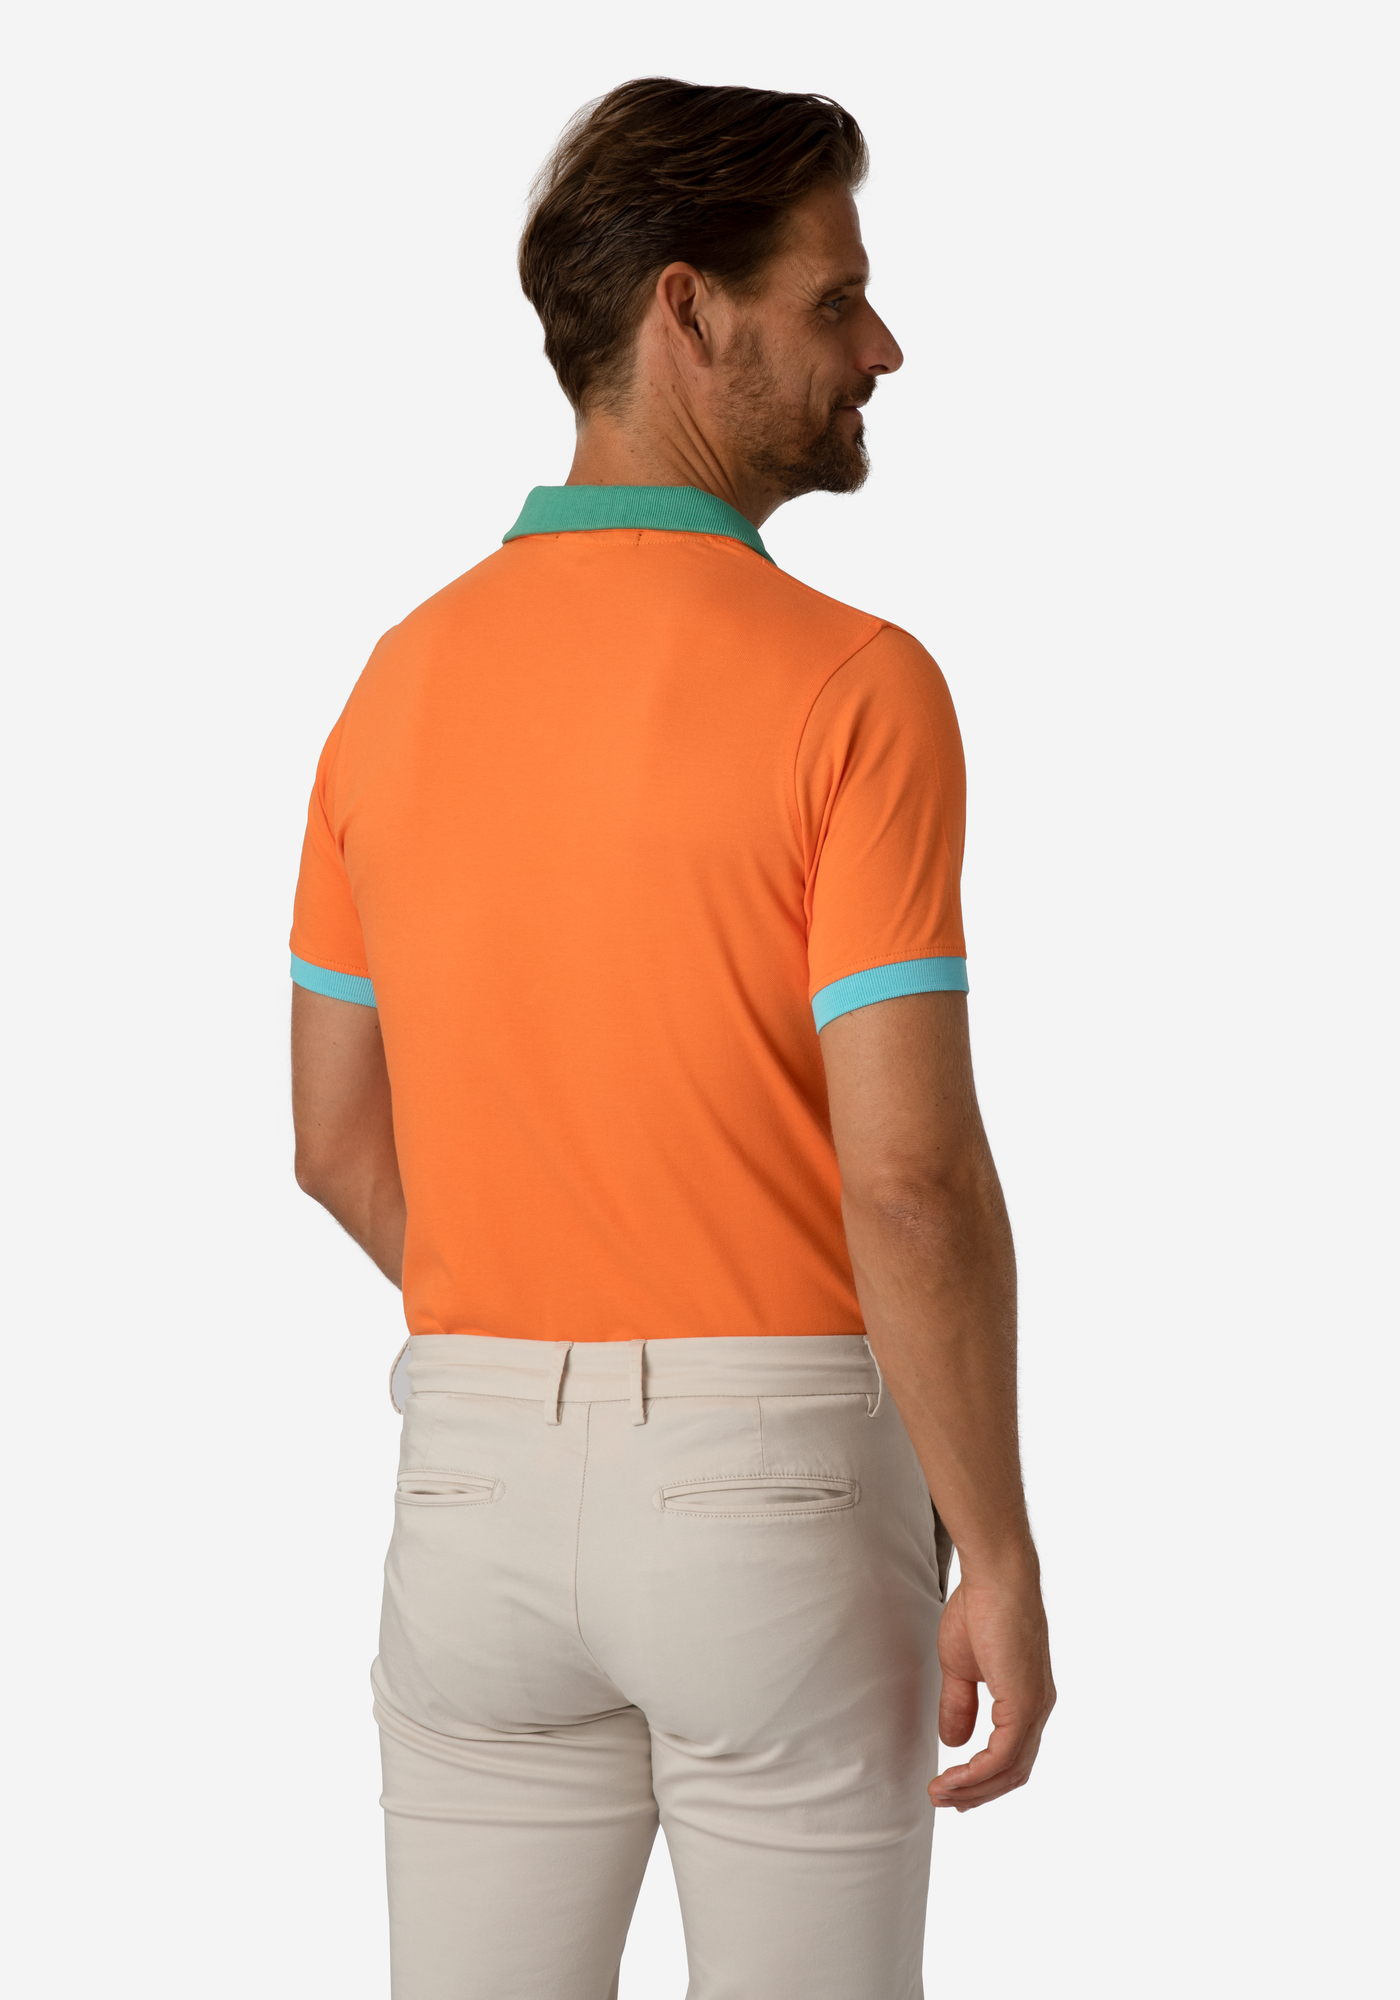 Blaze Orange Cotton Lycra Polo Shirt